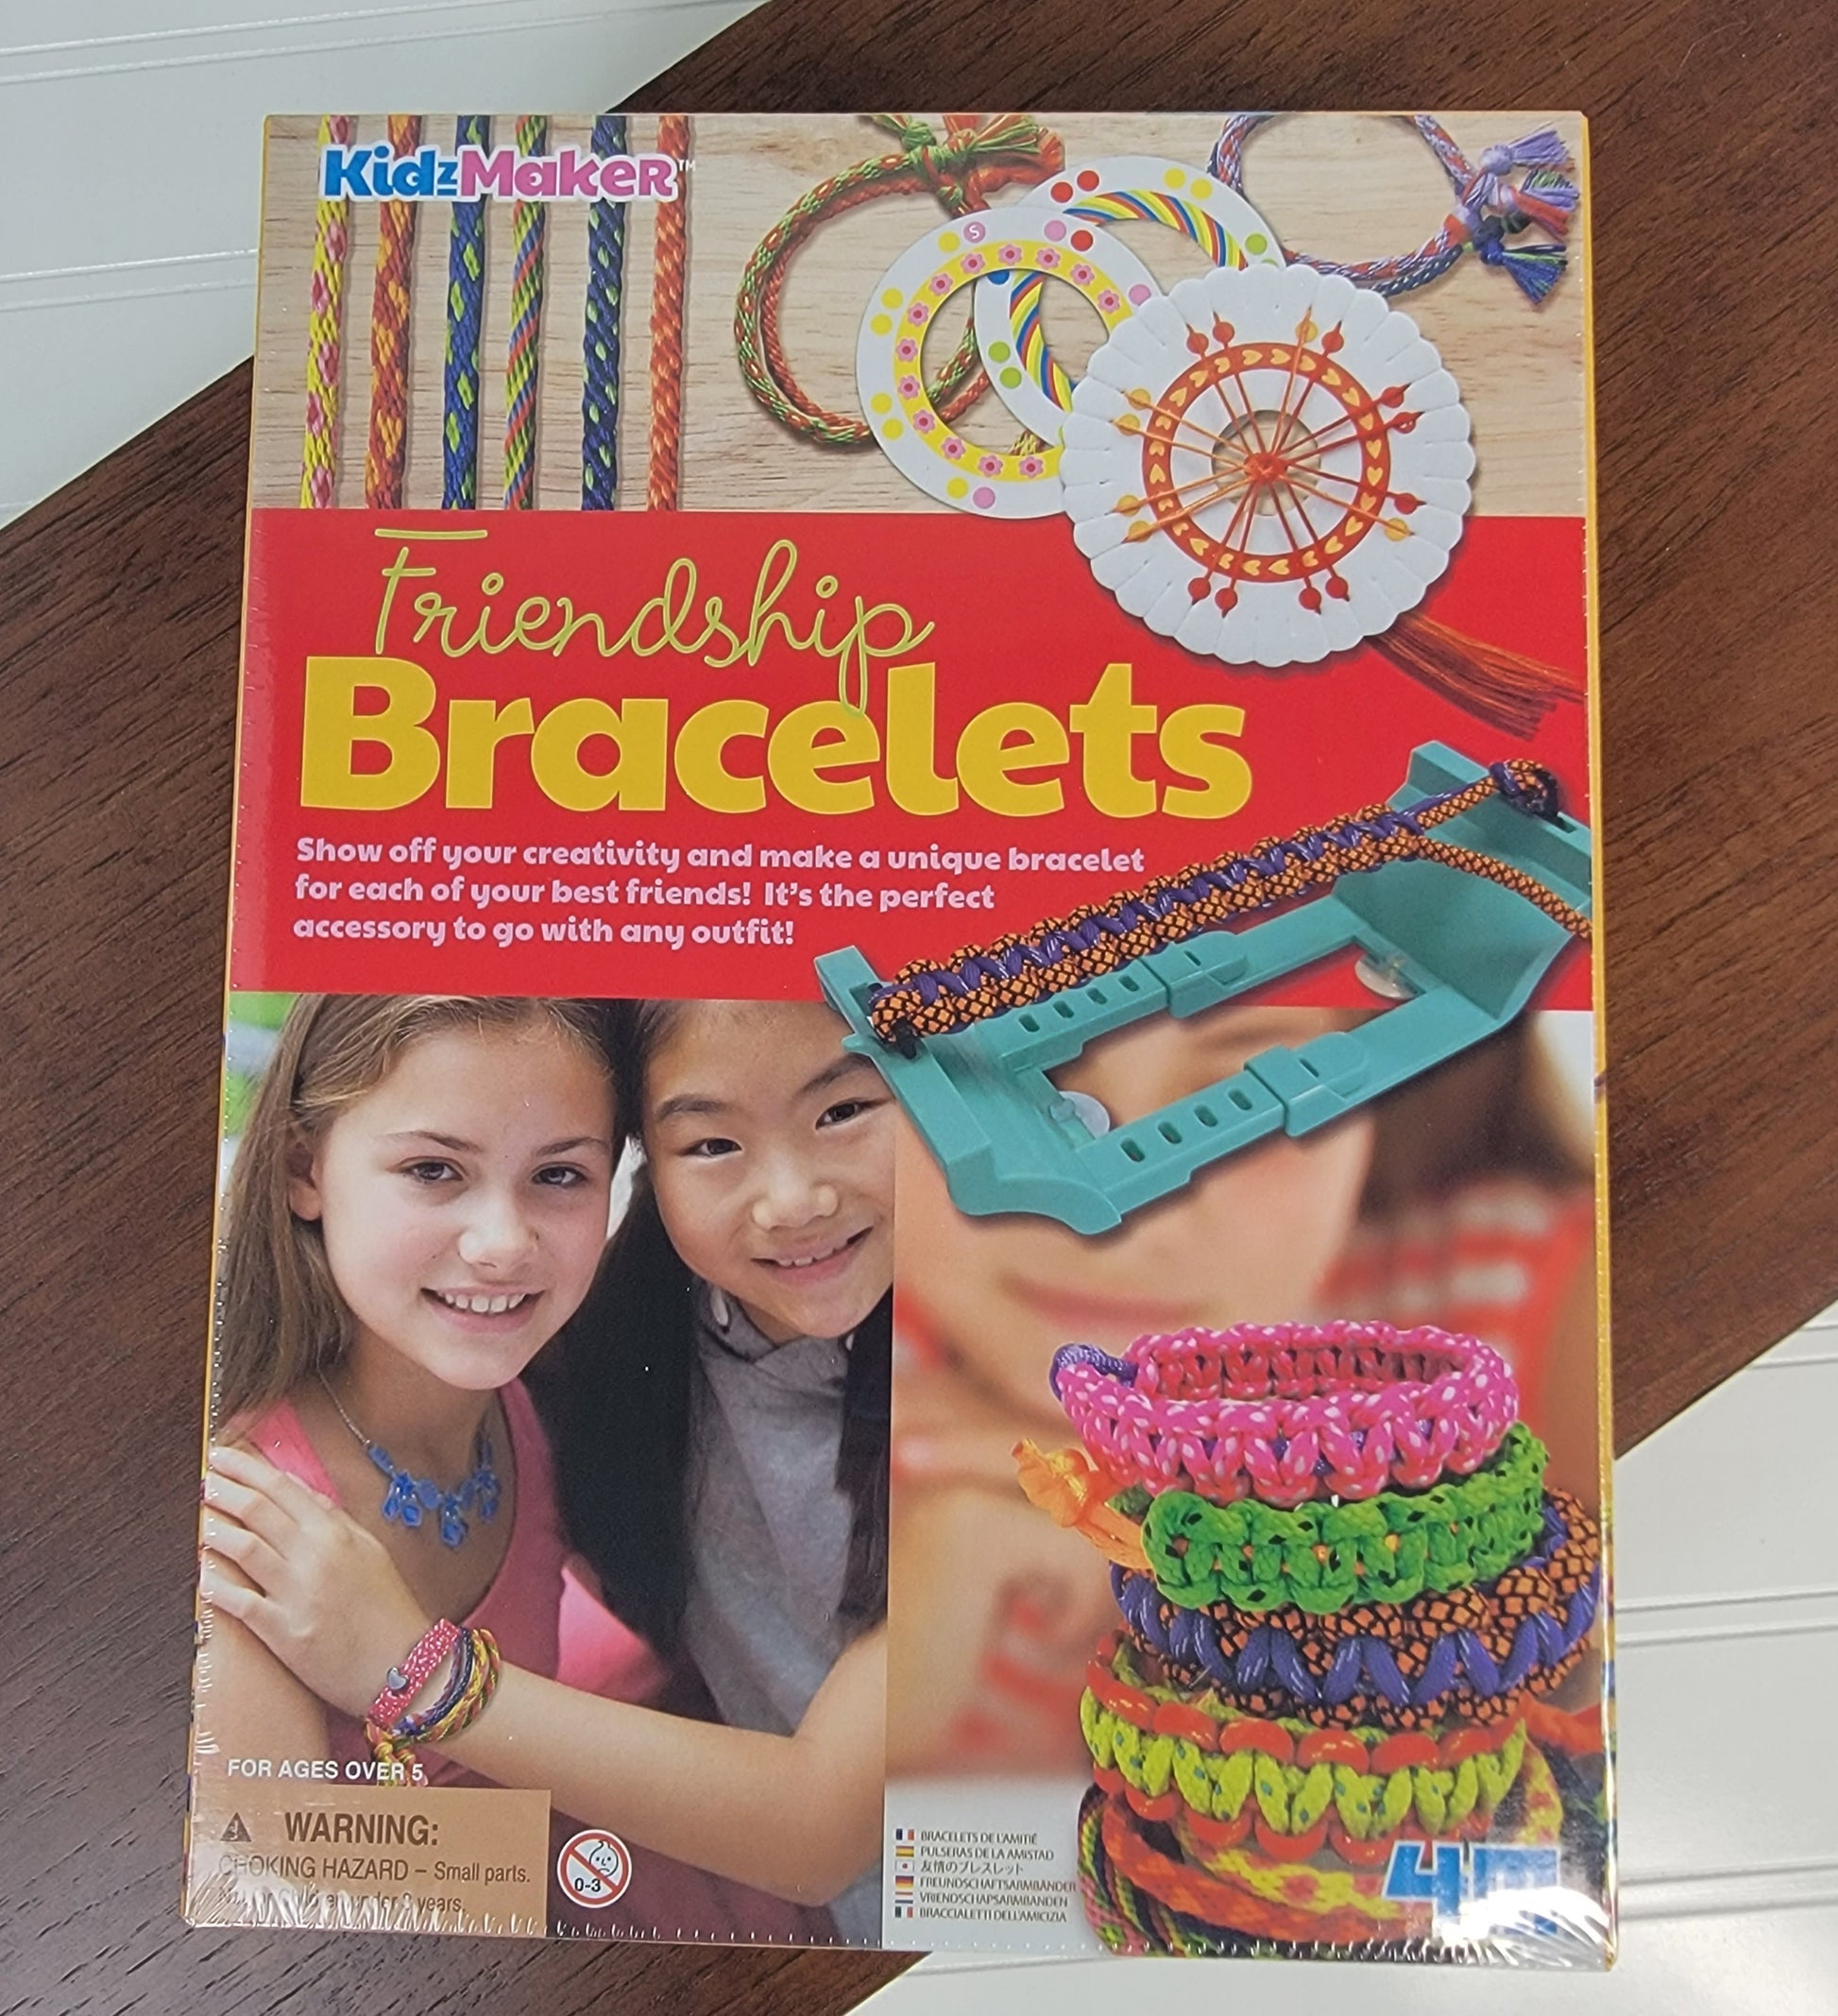 Creativity for Kids Friendship Bracelets Kit